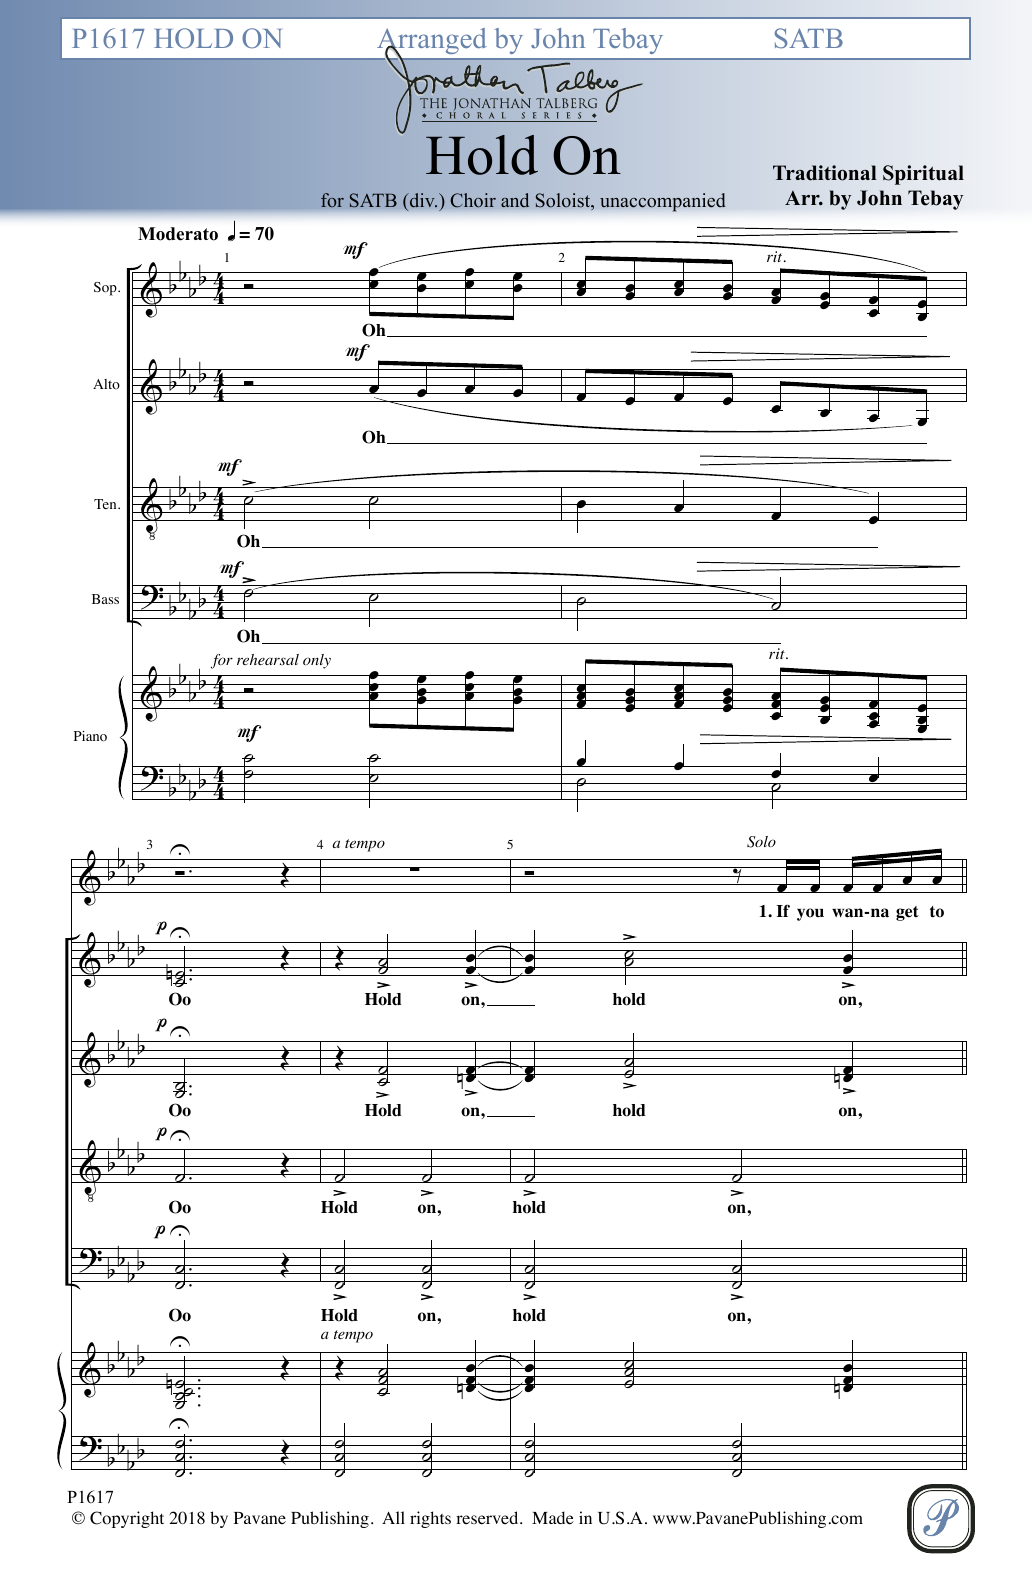 John Tebay Hold On Sheet Music Notes & Chords for SATB Choir - Download or Print PDF